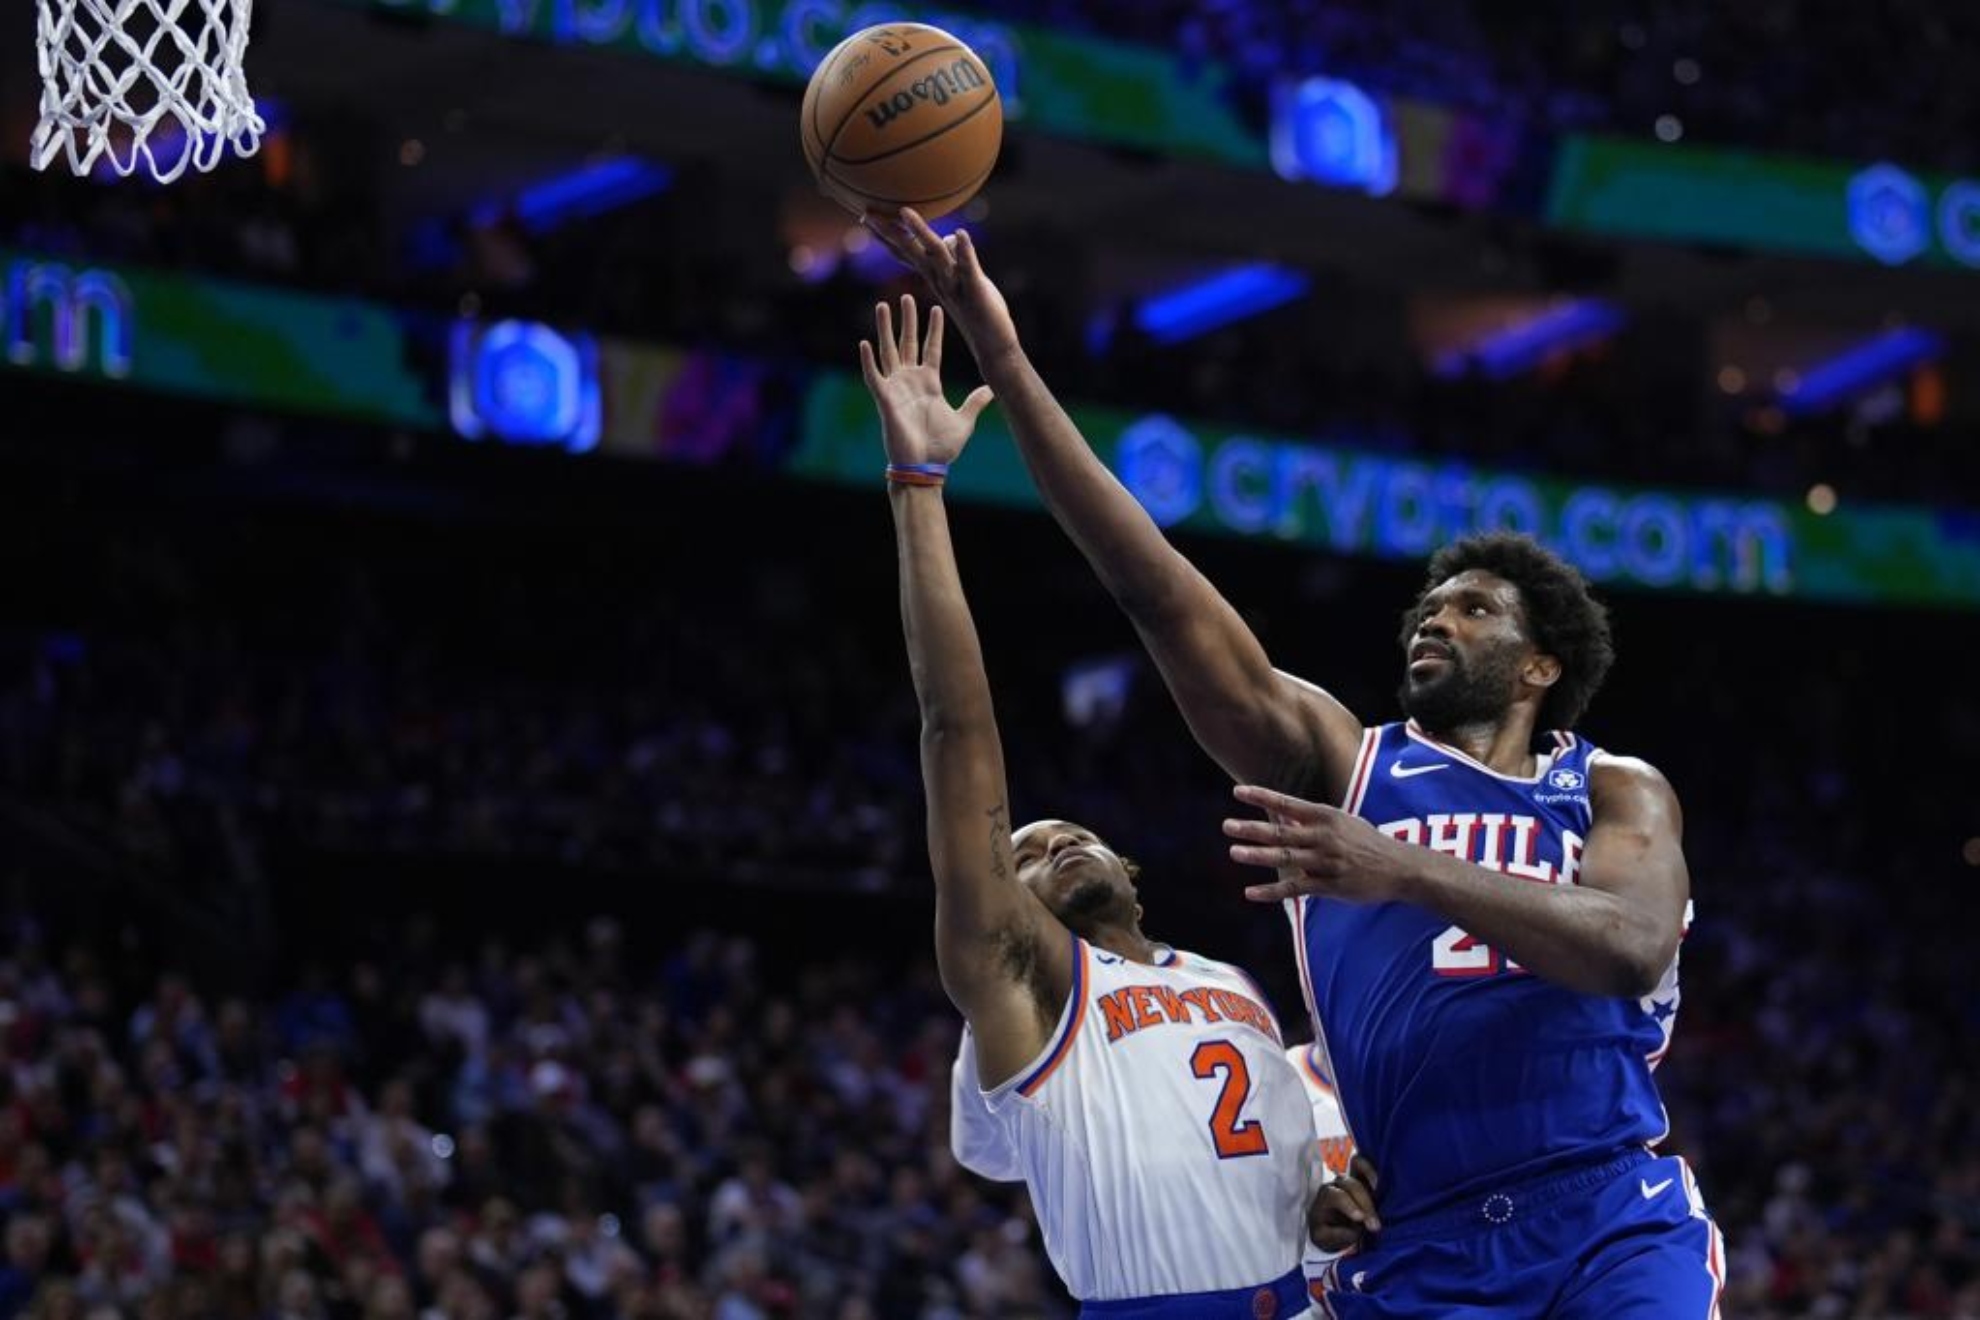 Un hist�rico Embiid da vida a Philadelphia: �50 puntos a los Knicks!